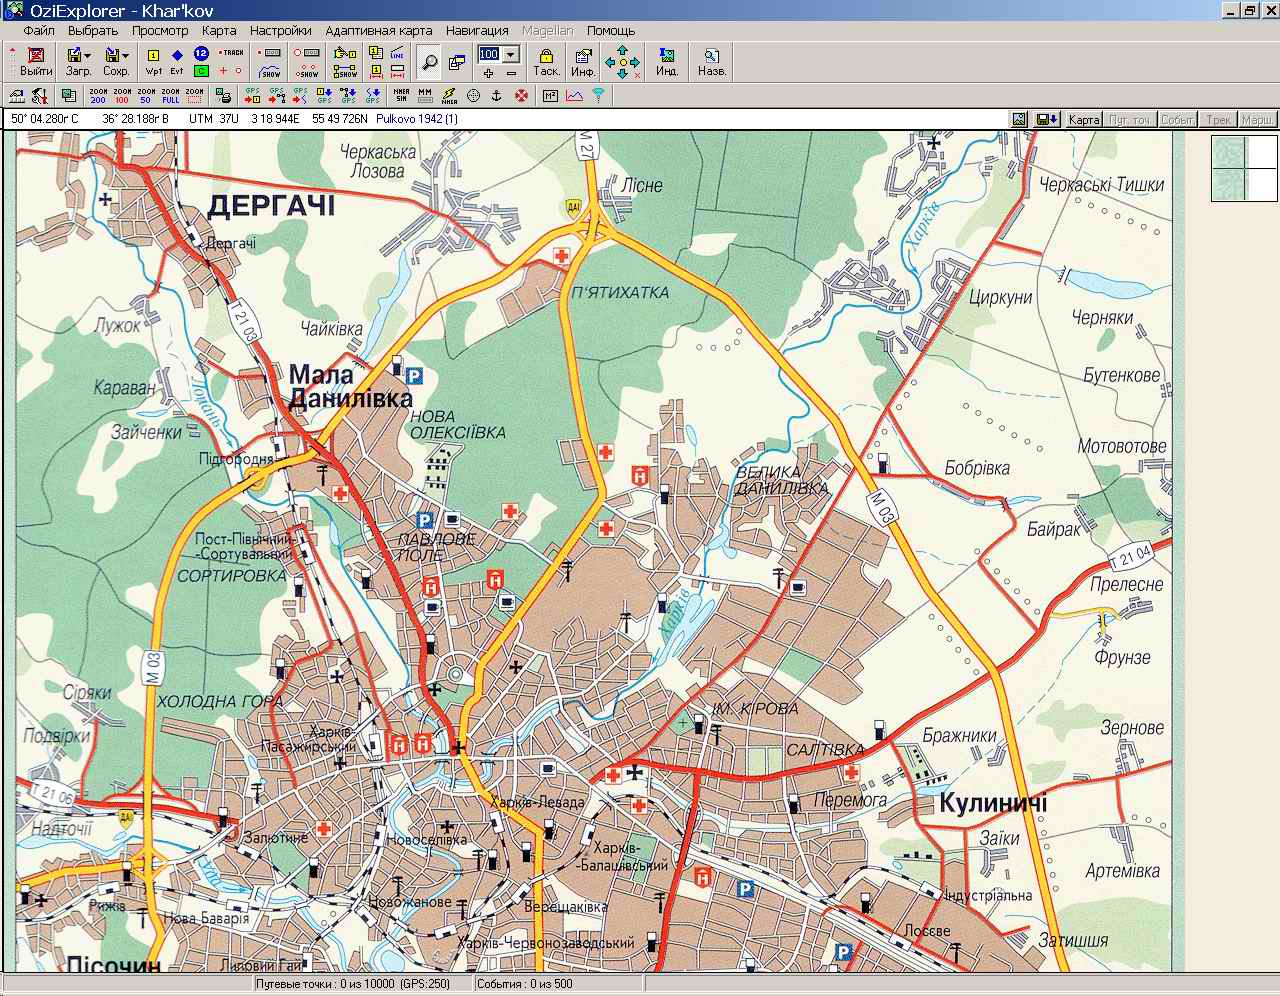 GPS-Karte von Kharkov